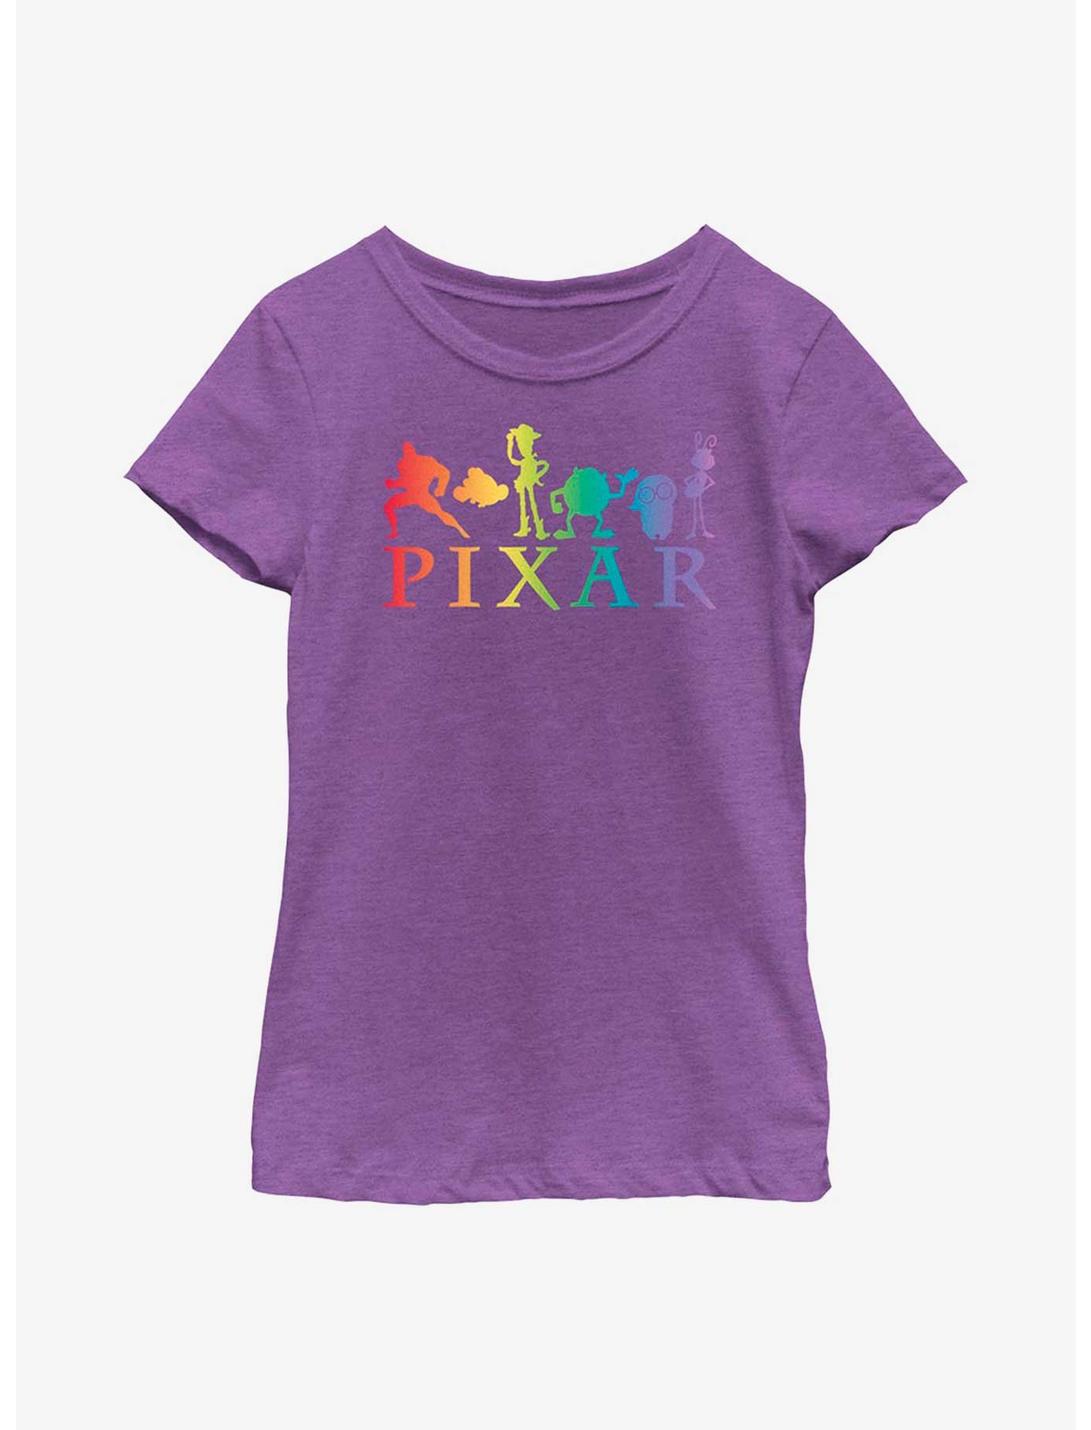 Pixar Rainbow Lineup Youth T-Shirt, PURPLE BERRY, hi-res